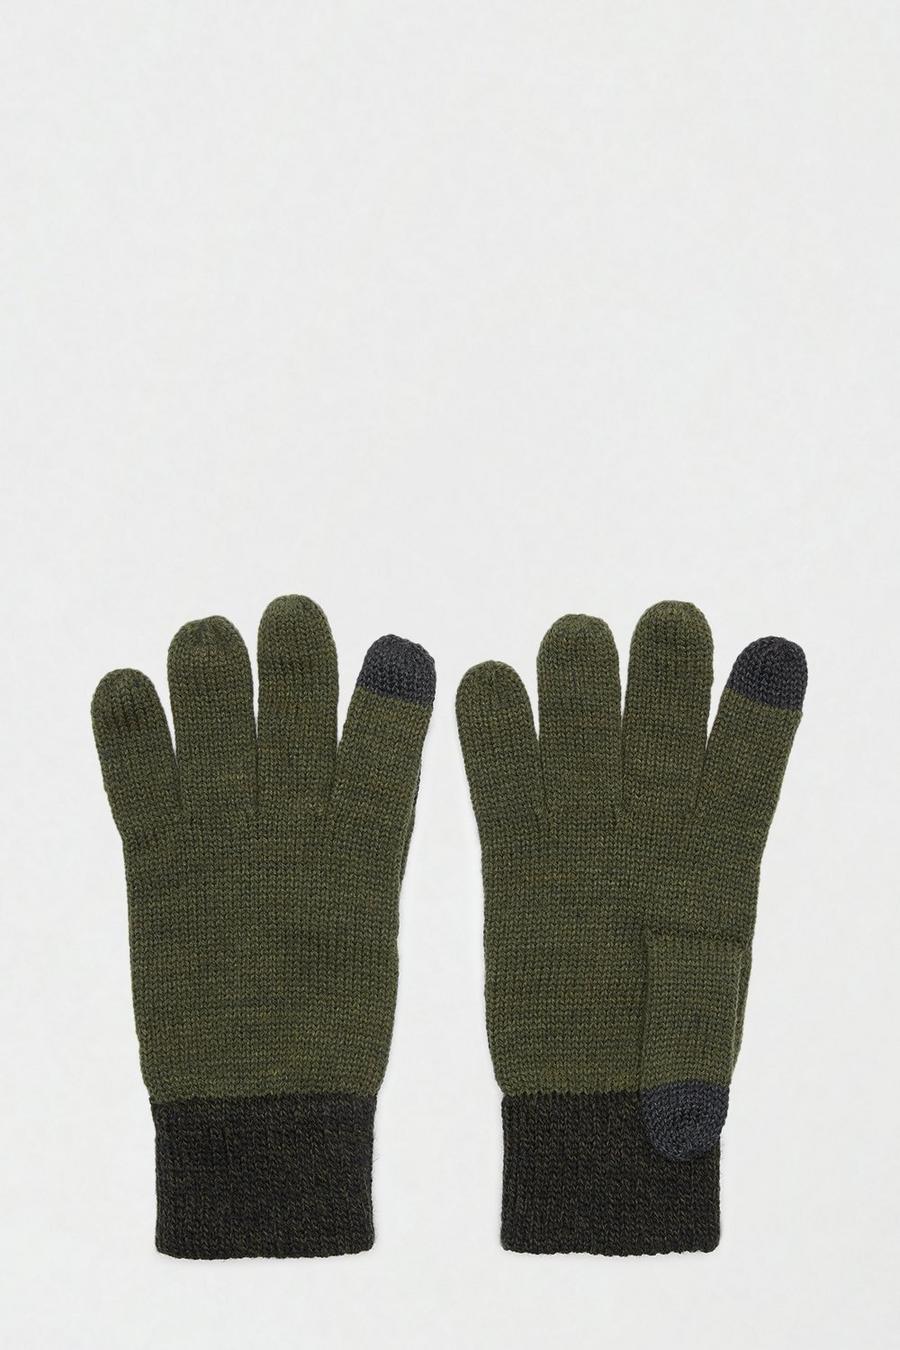 Contrast Cuff Gloves